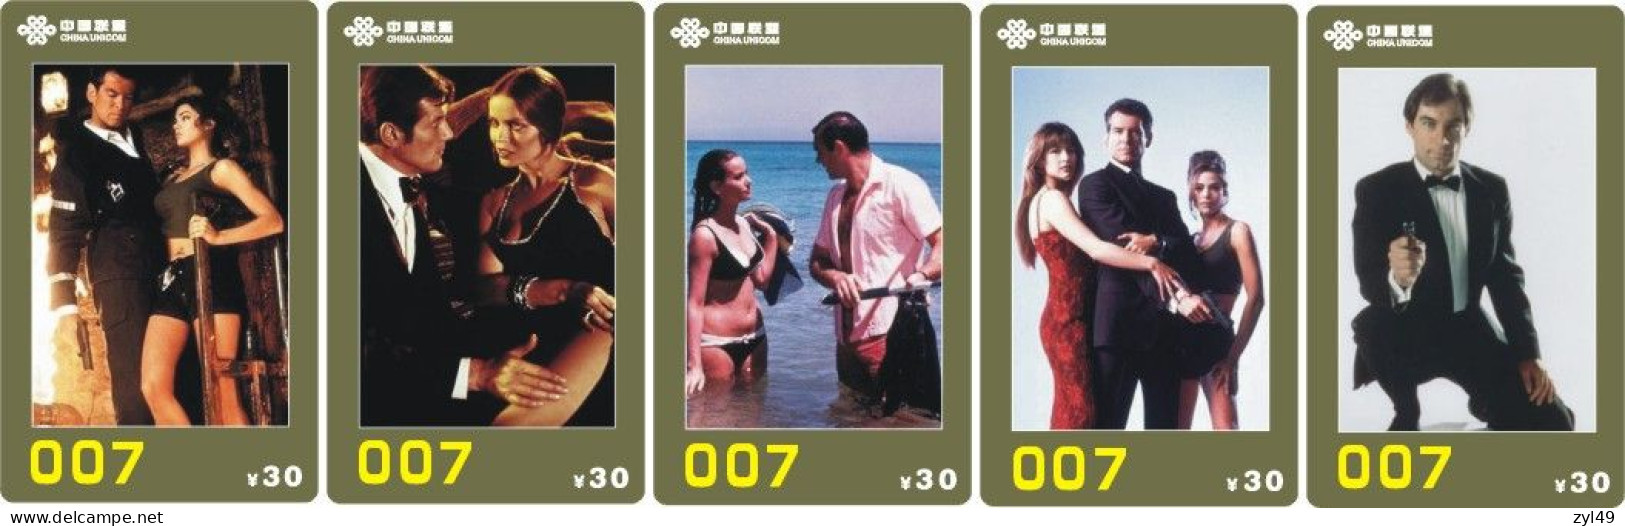 M13017 China phone cards James Bond 007 113pcs